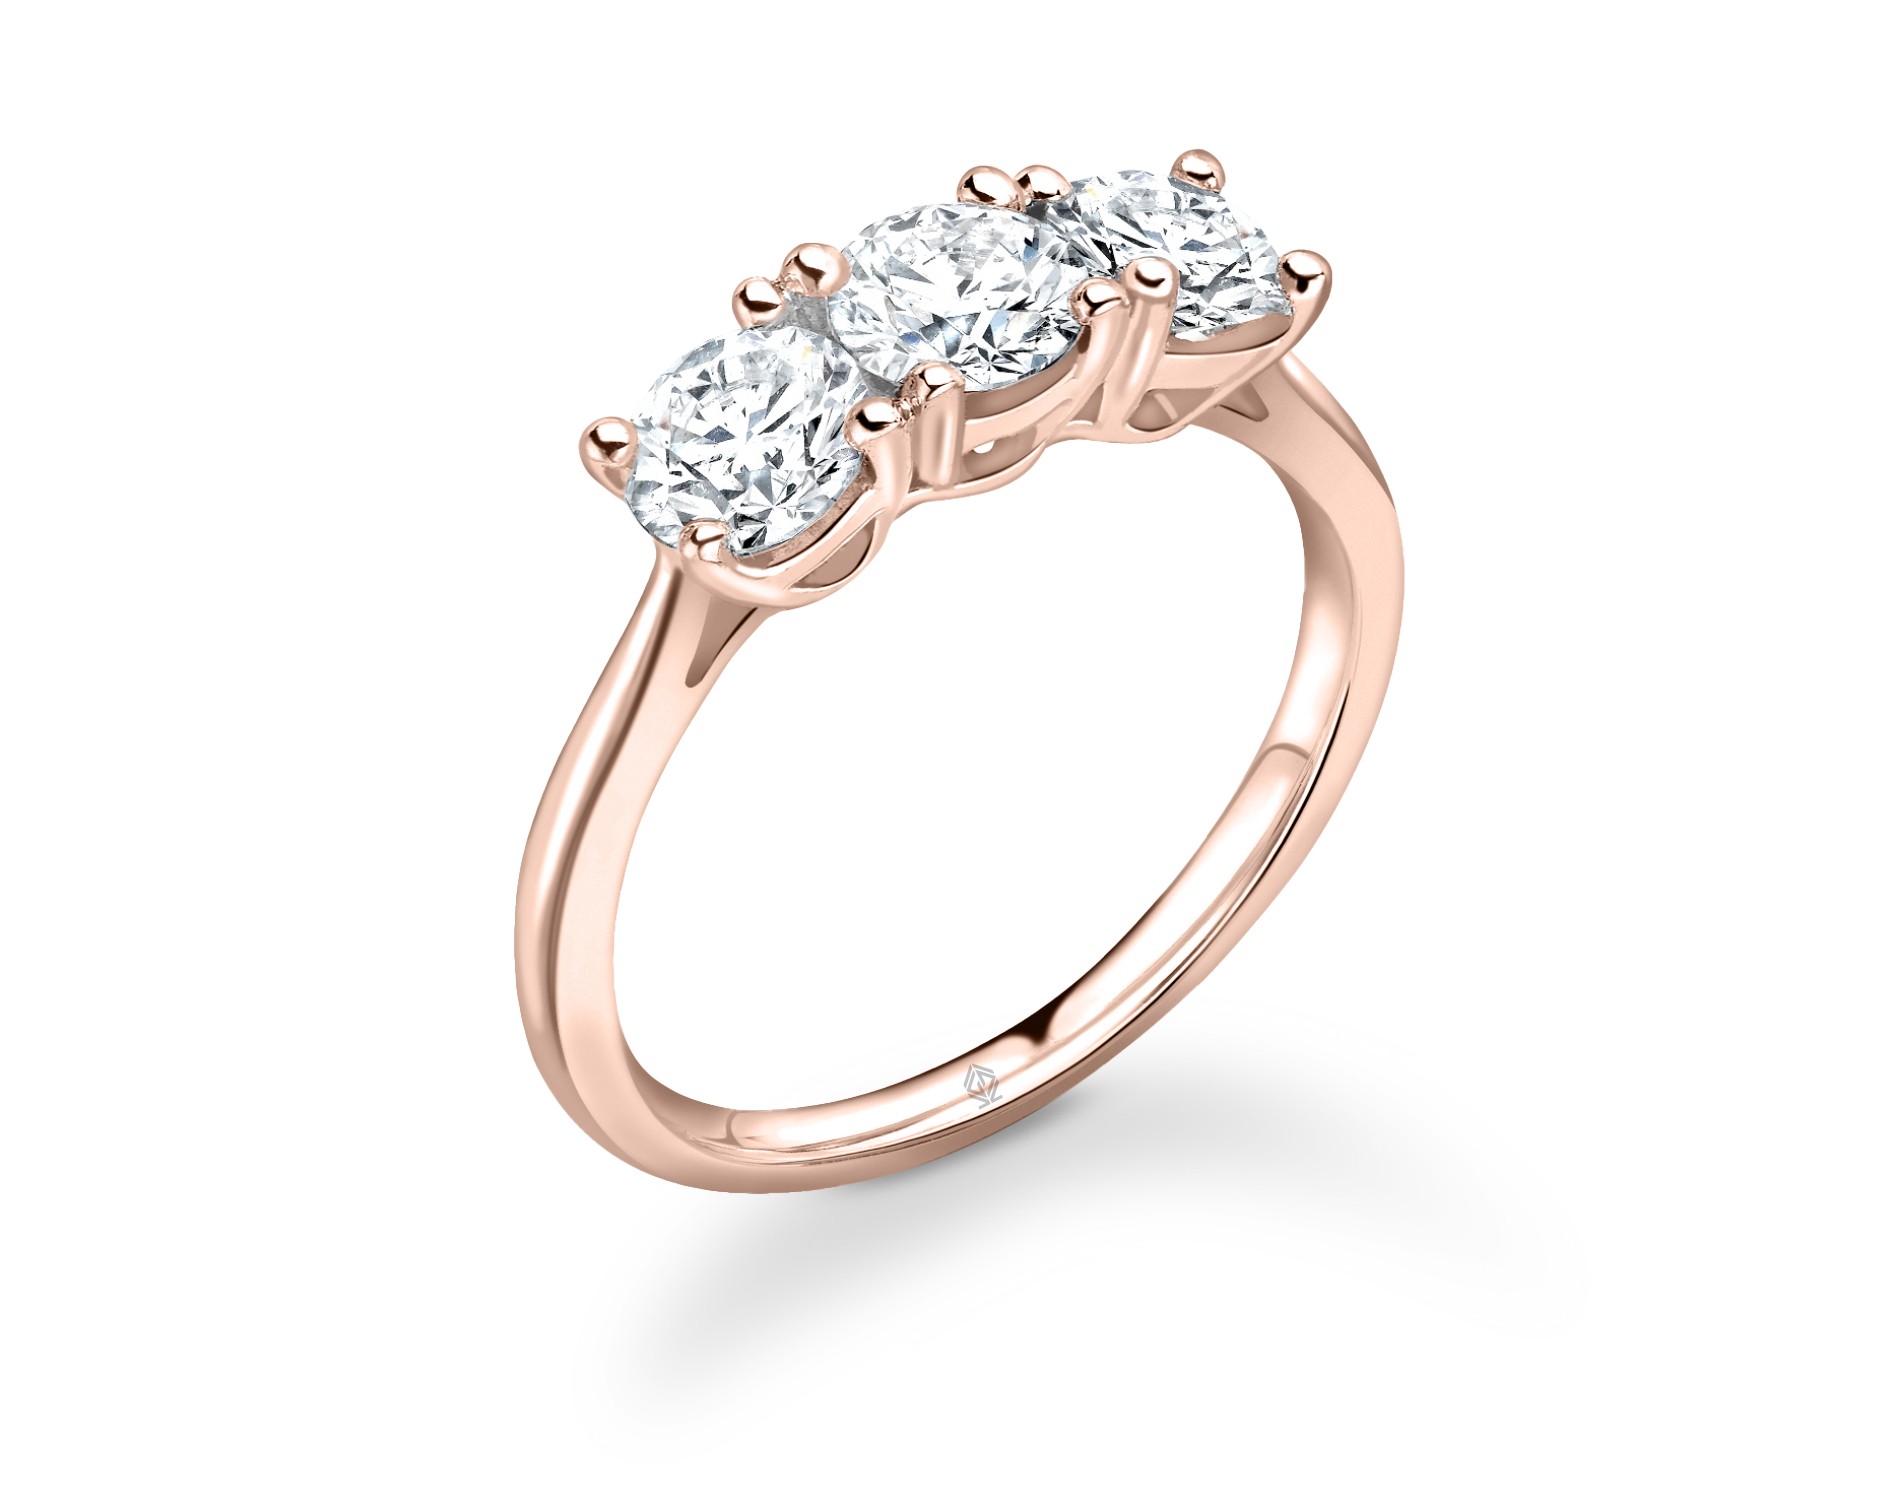 18K ROSE GOLD ROUND CUT TRILOGY DIAMOND ENGAGEMENT RING